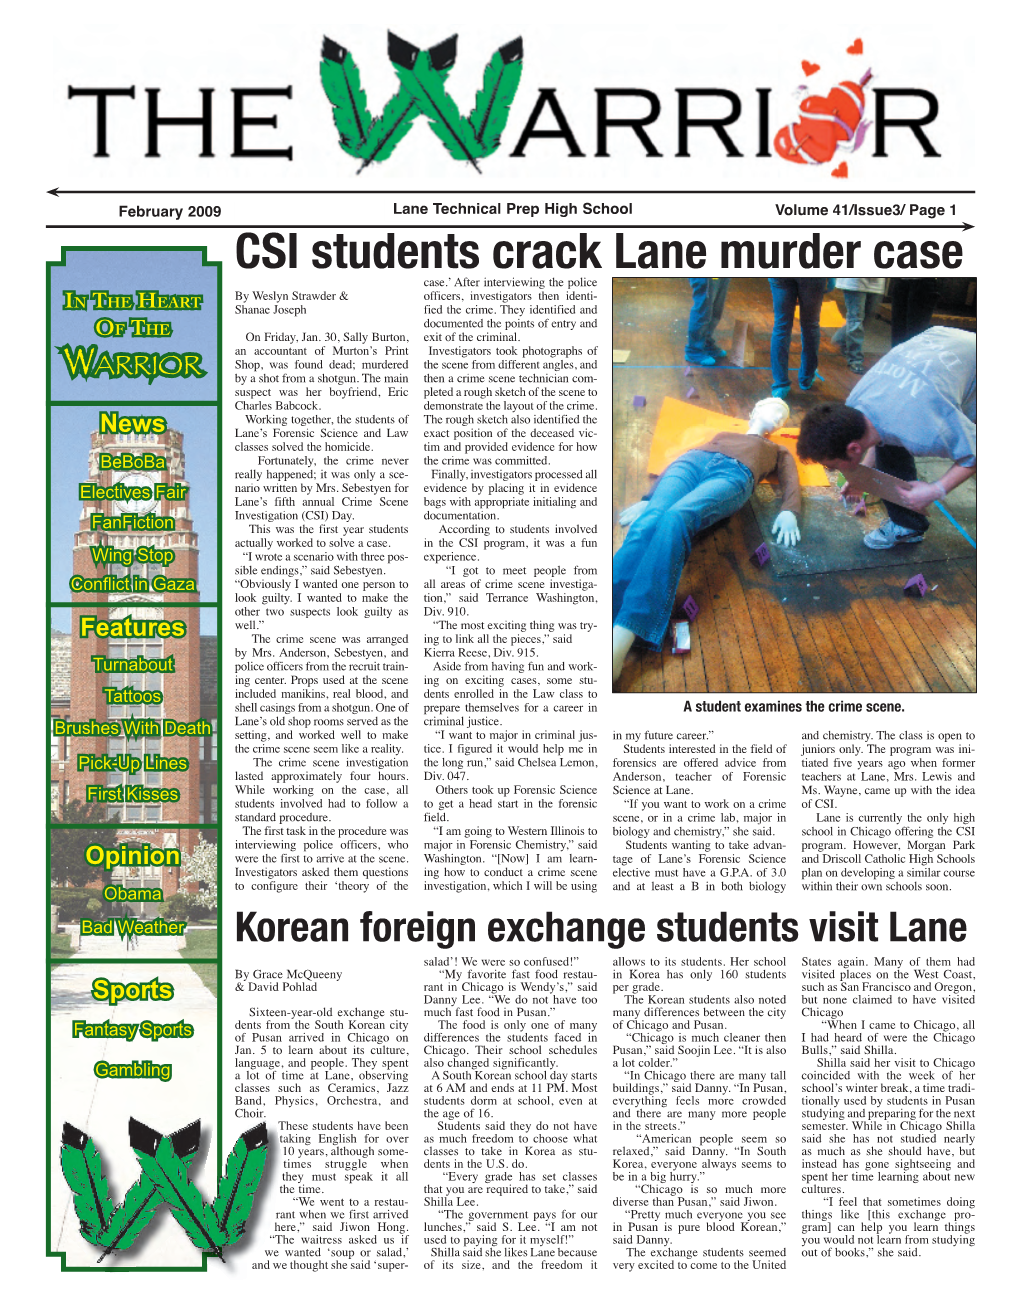 CSI Students Crack Lane Murder Case